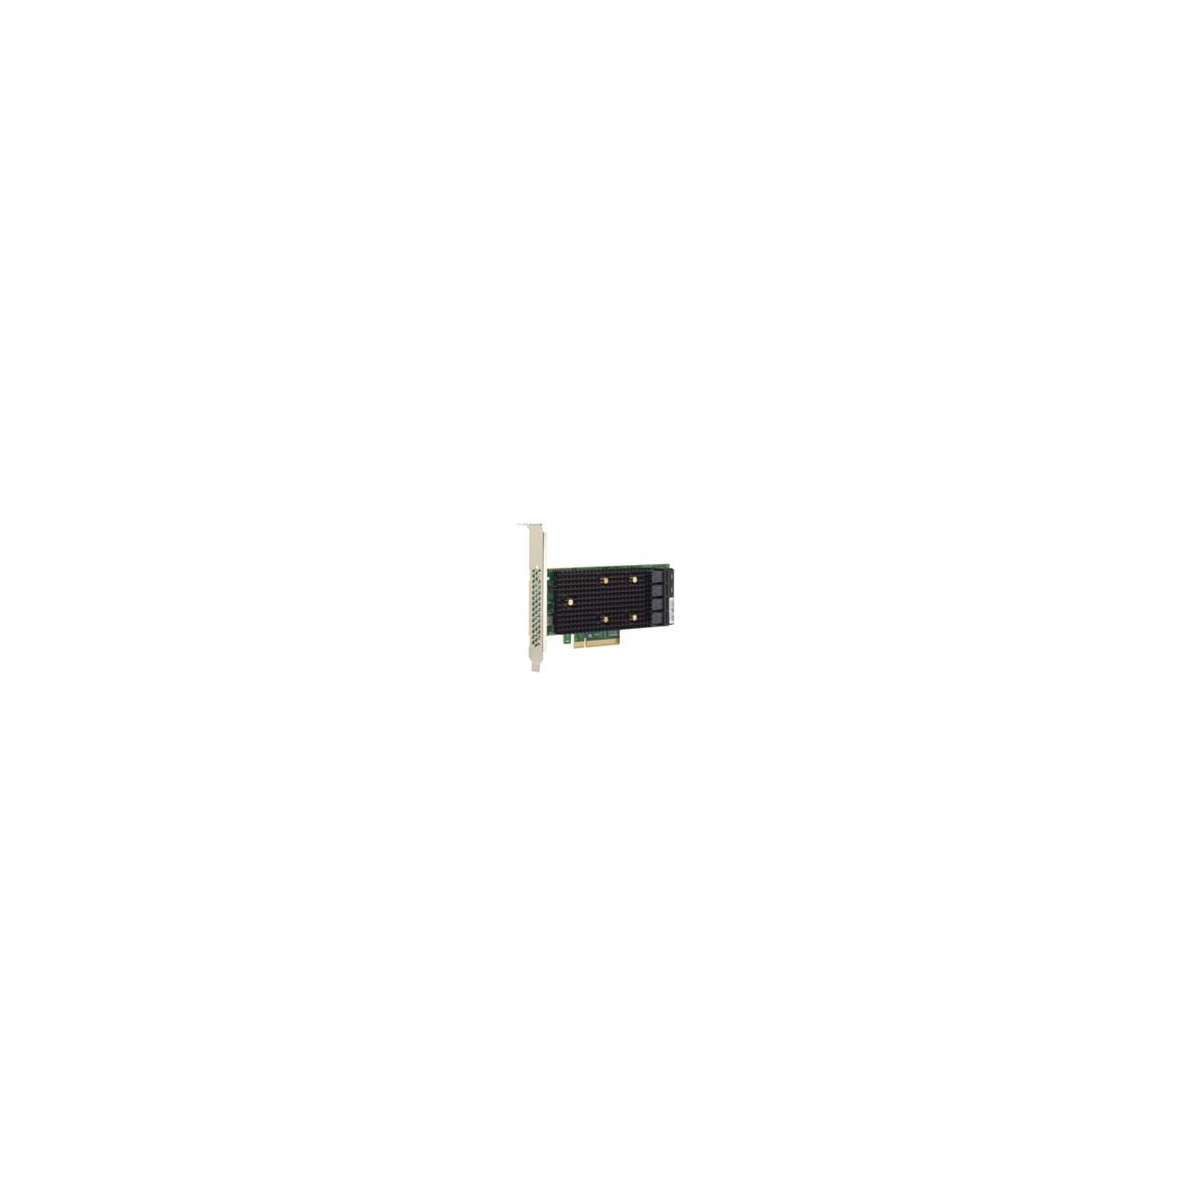 BROADCOM 9400-16i - PCIe - SAS,SATA - Low-profile - Black,Green,Metallic - 4500000 h - 11.95 W